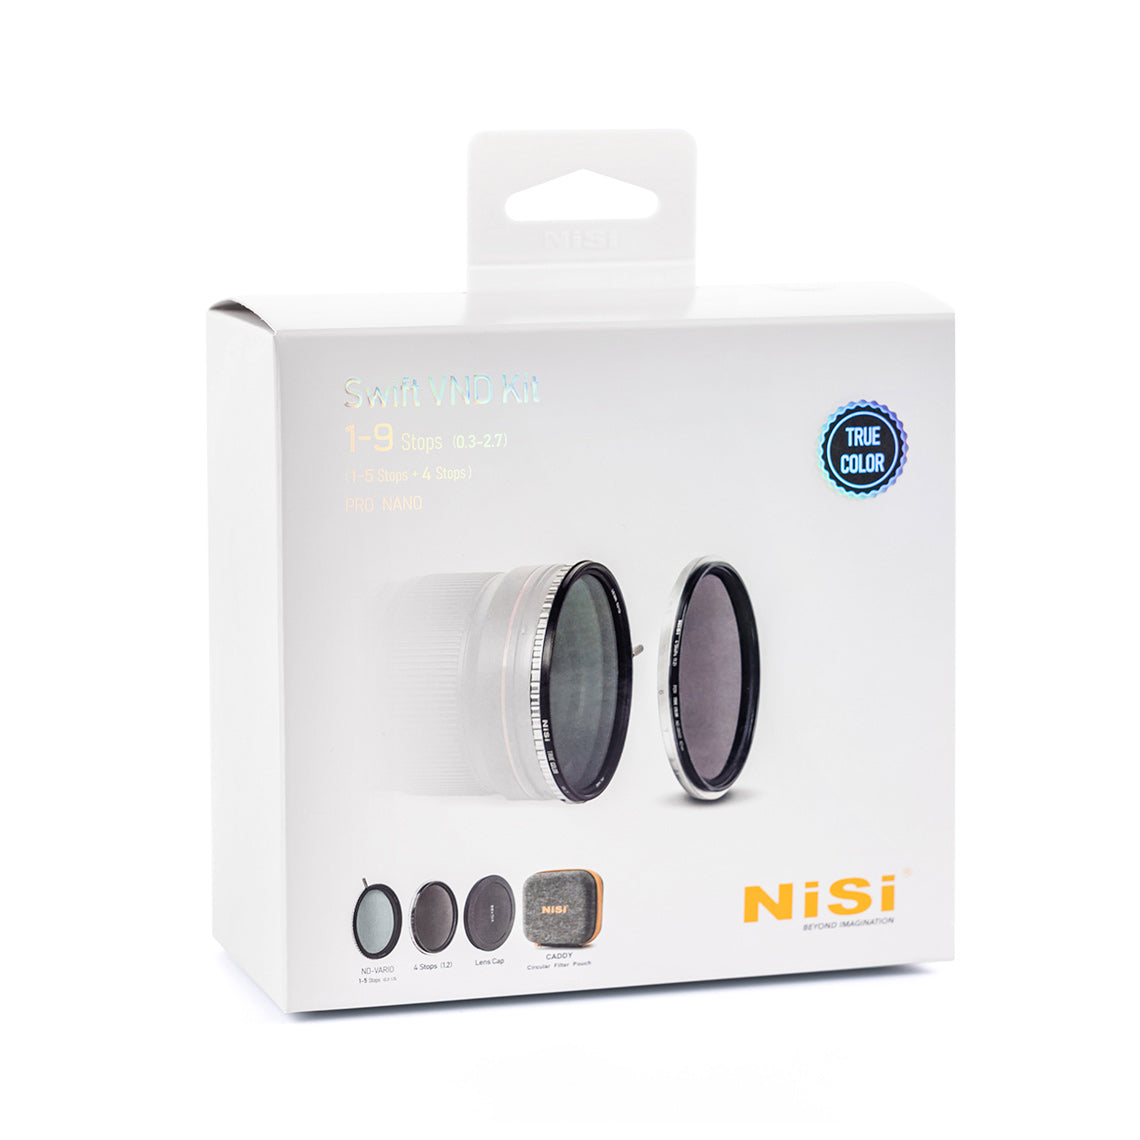 NiSi SWIFT VND キット 67mm - 業務用撮影・映像・音響・ドローン専門 ...